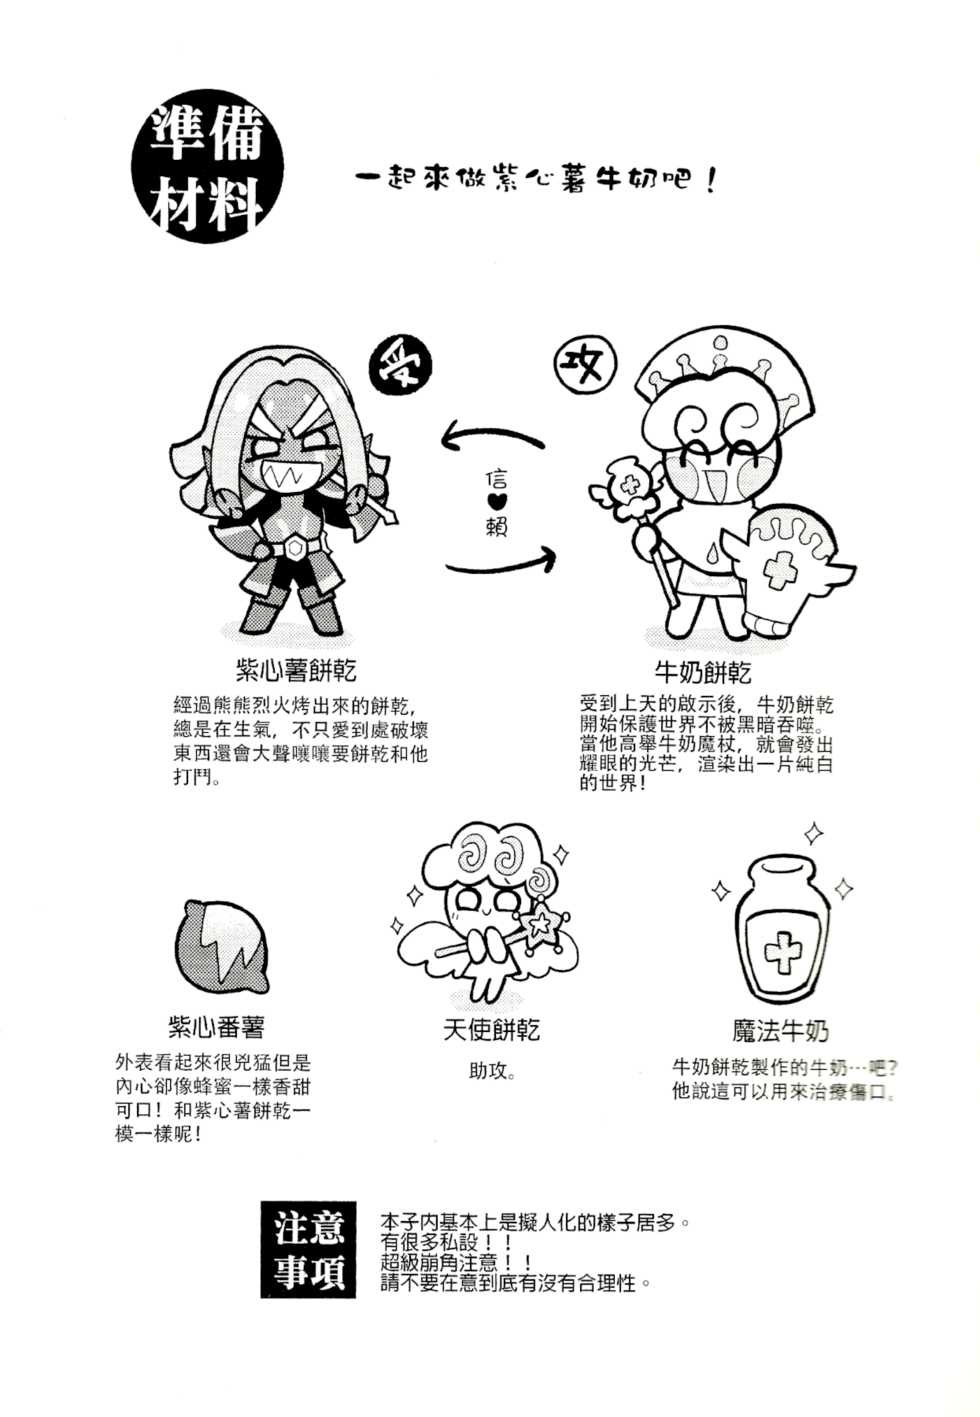 (Finish Prison) Yī qǐlái zuò zǐ xīn shǔ niúnǎi ba | "Let's make purple sweet potato milk together" (Cookie Run) - Page 2